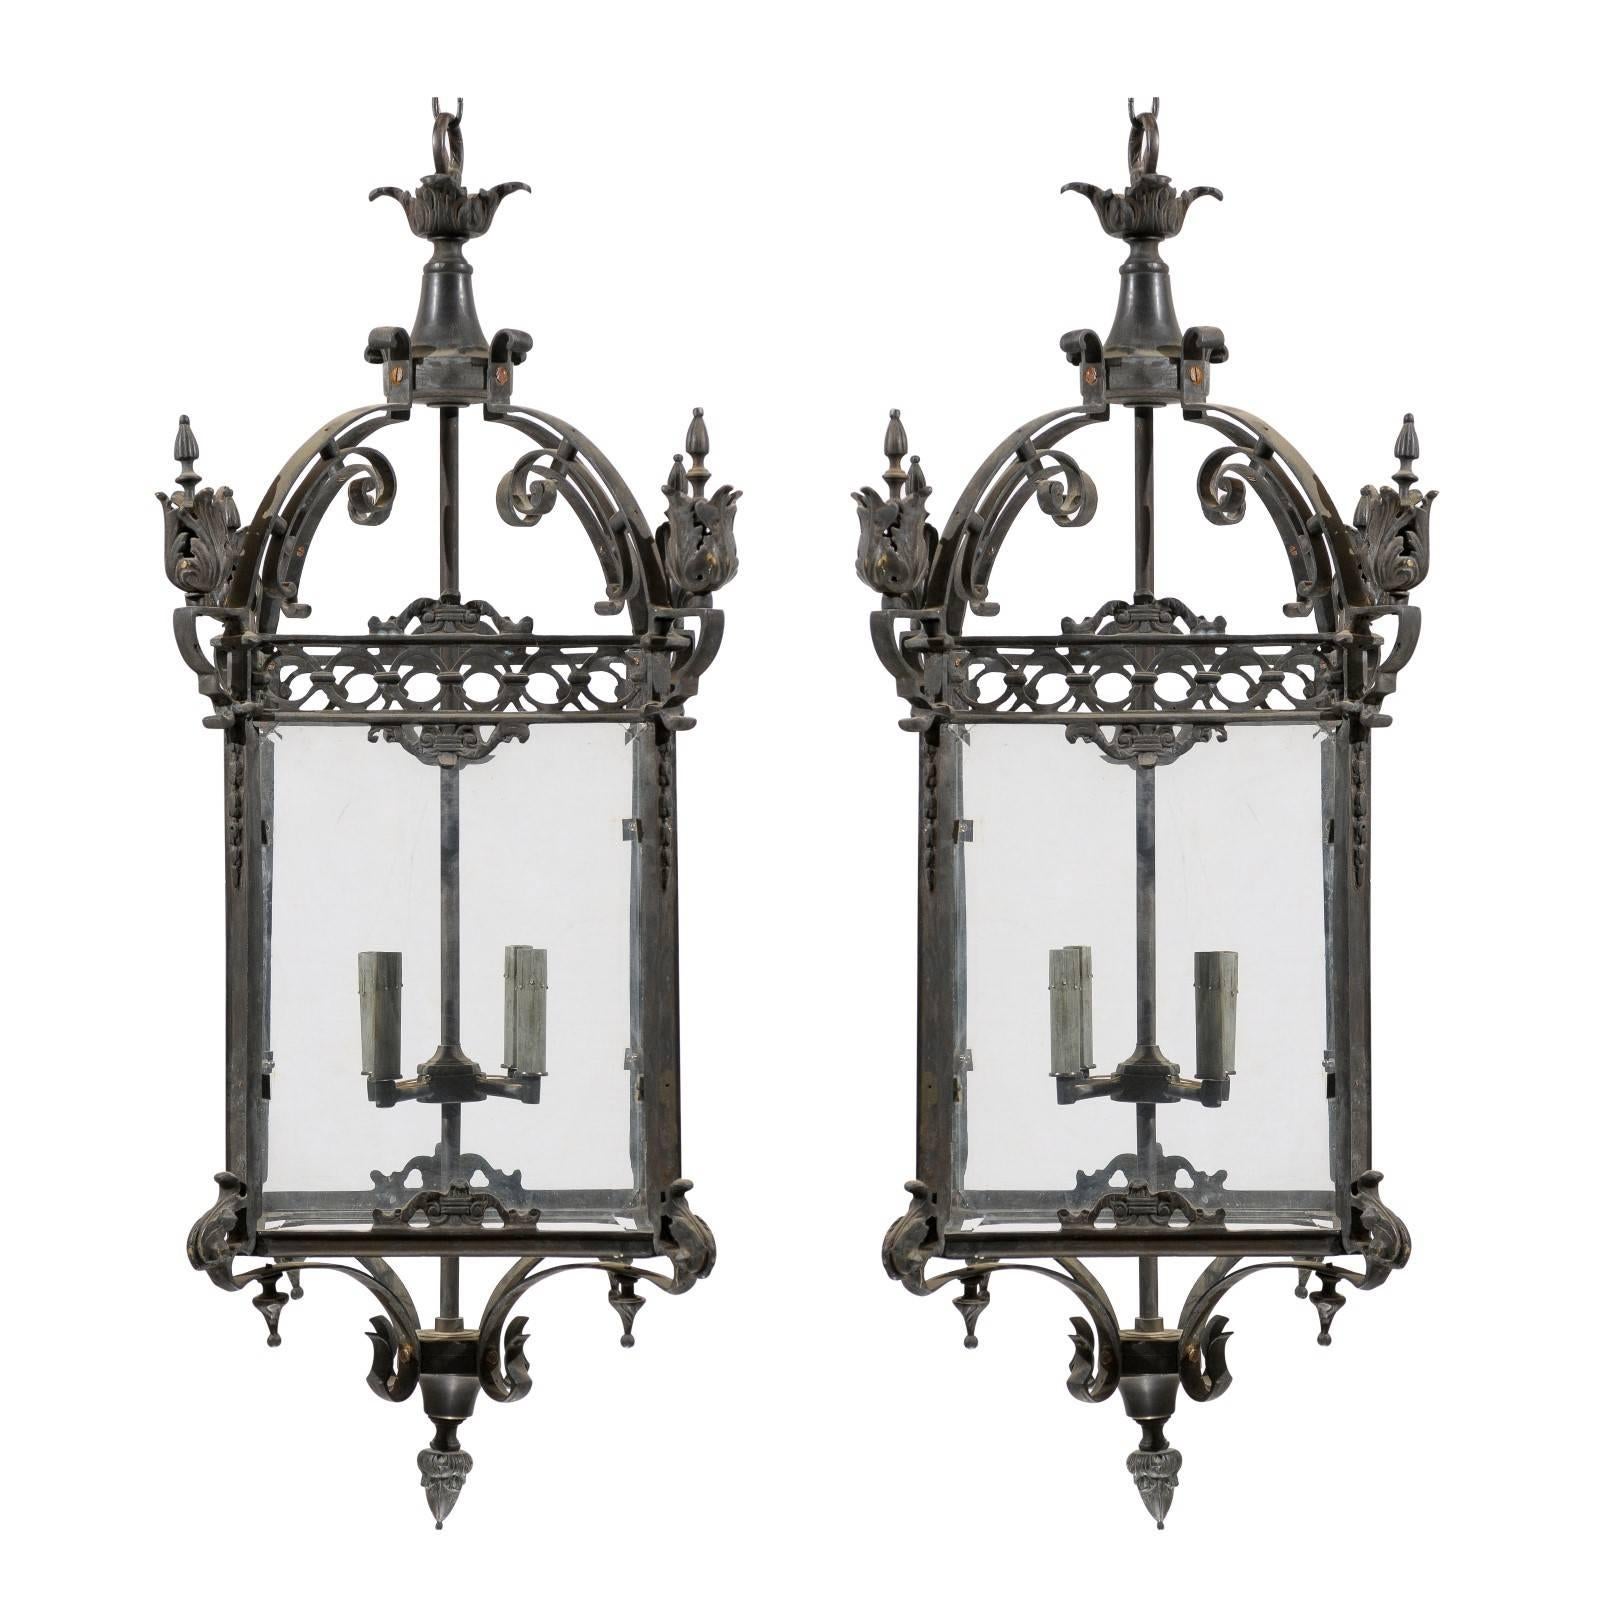 Pair of Large Sized Ornately Decorated Dark Colored Iron Four-Light Lanterns